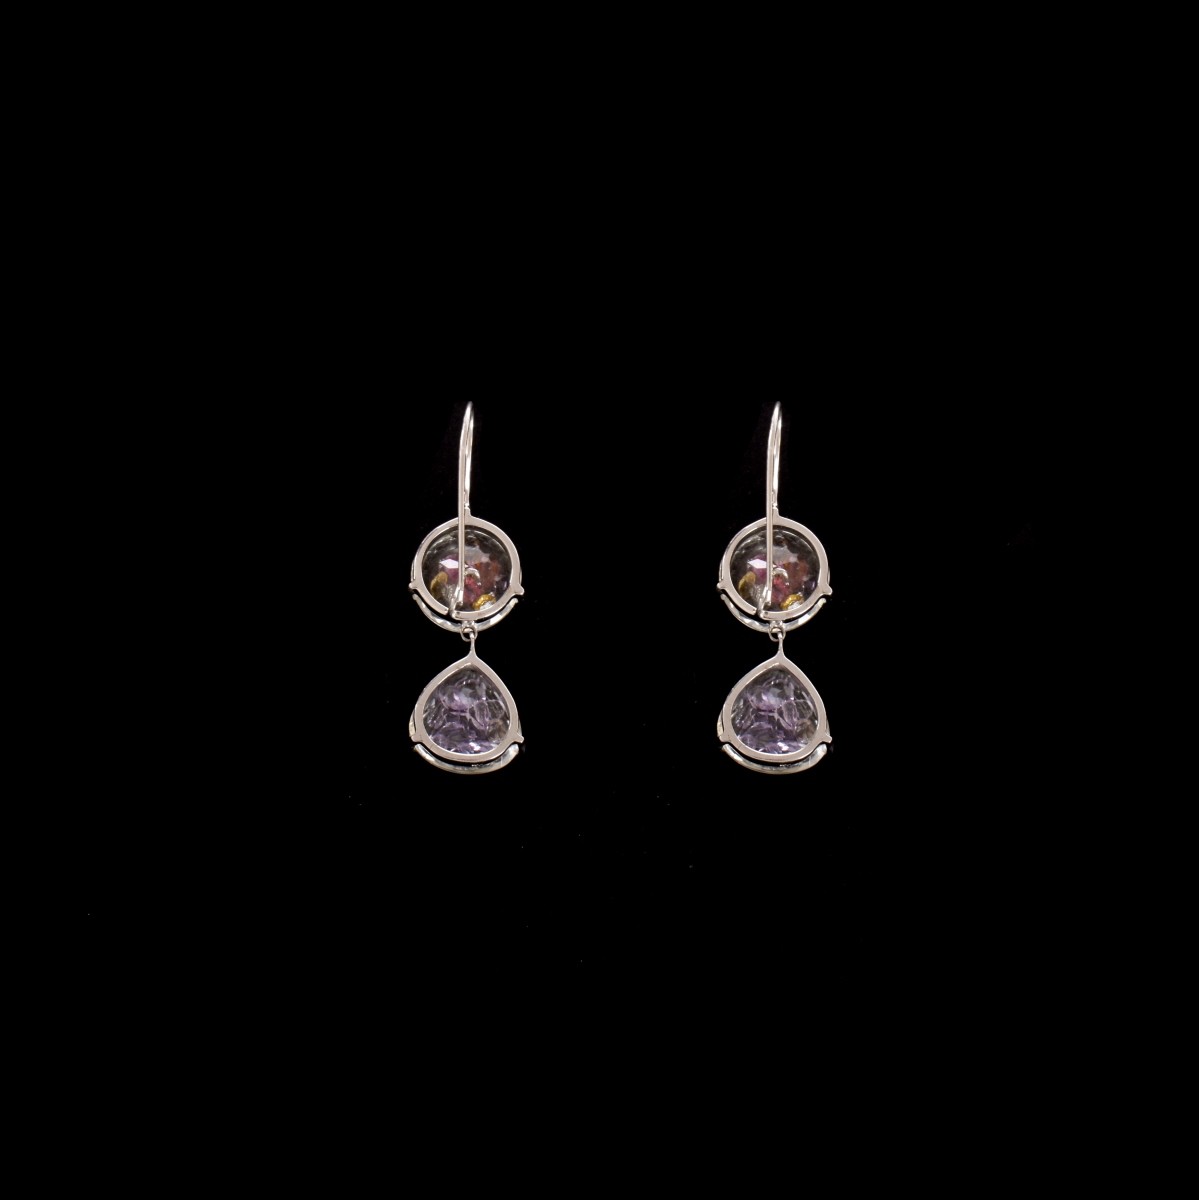 Gemstone and Silver Earrings